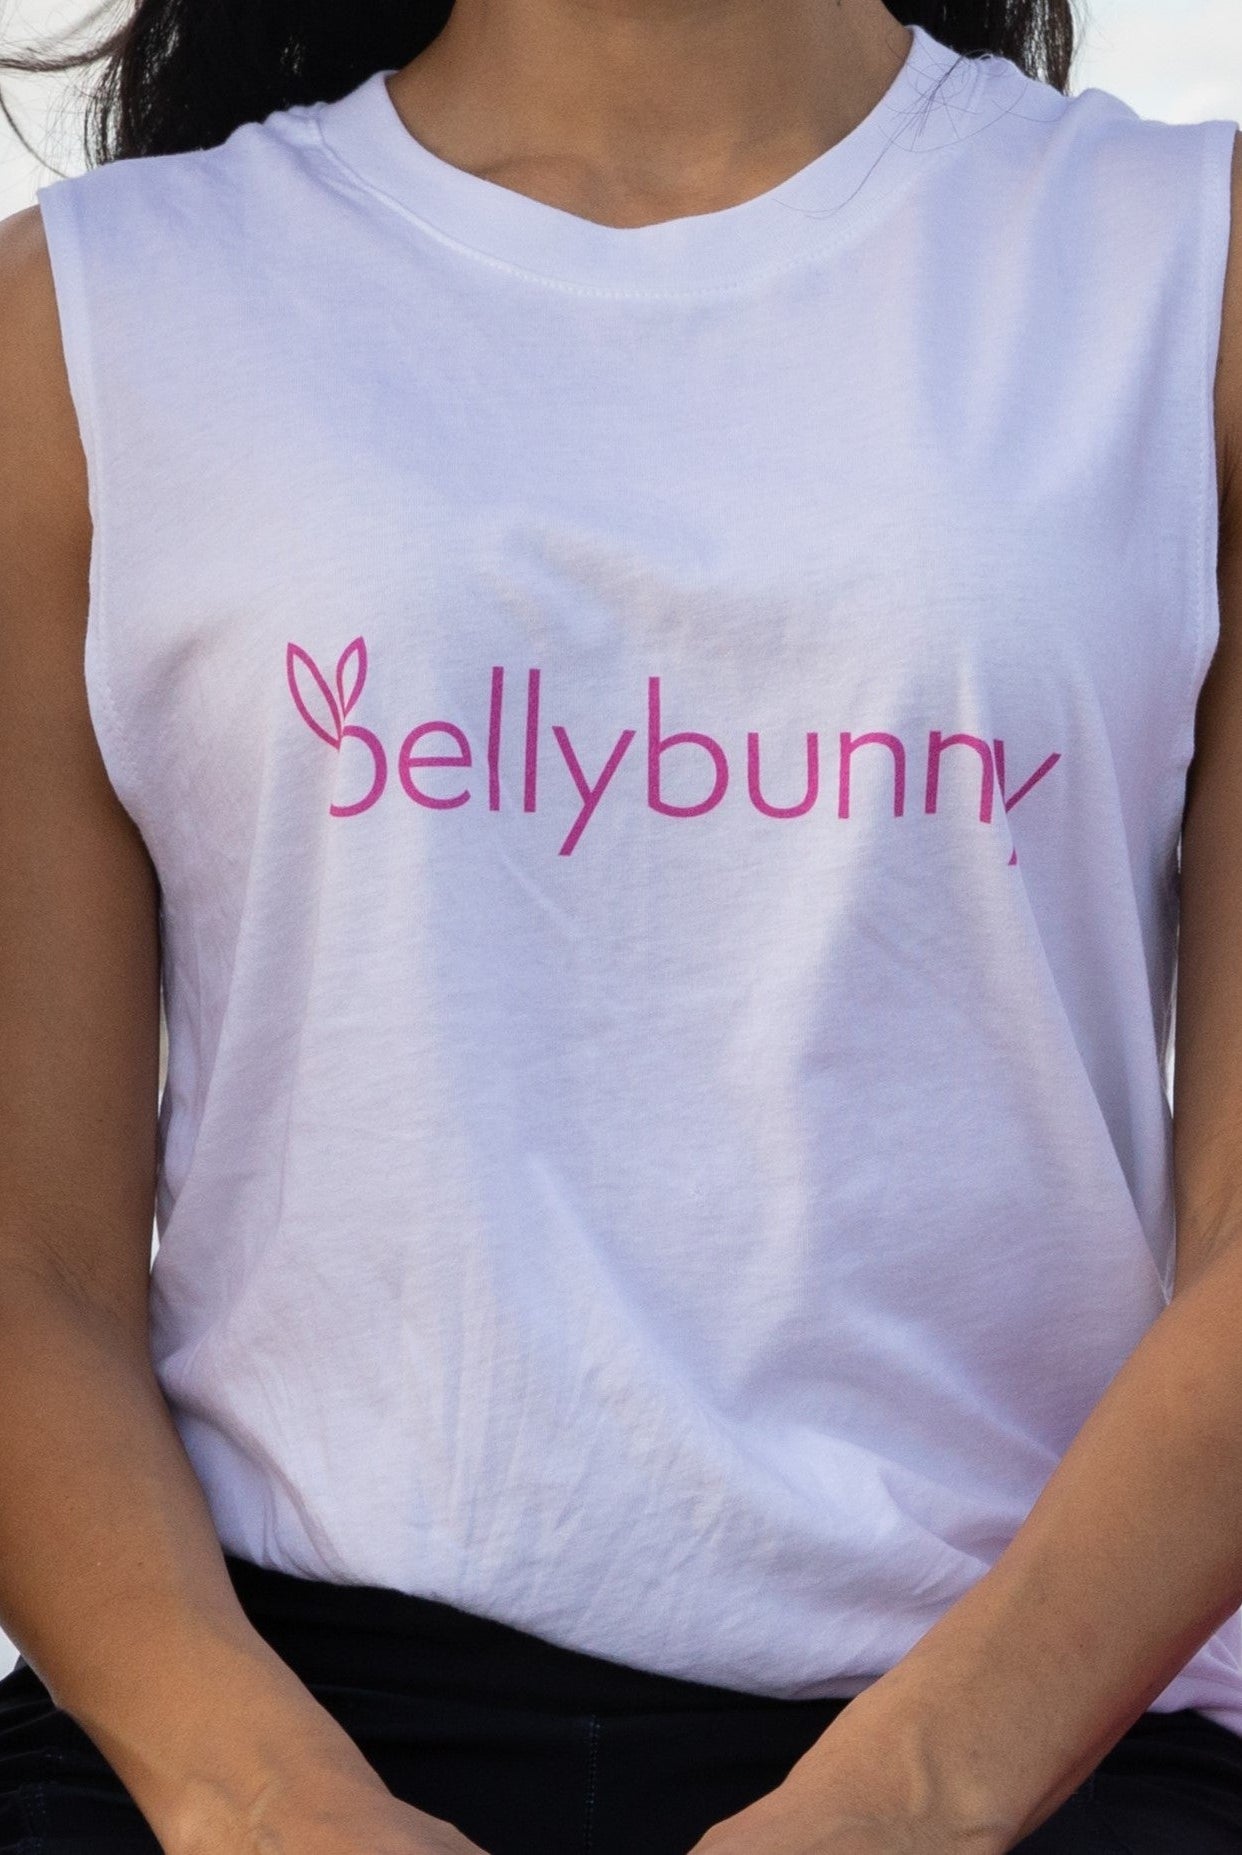 Bellybunny Women's Muscle Shirt